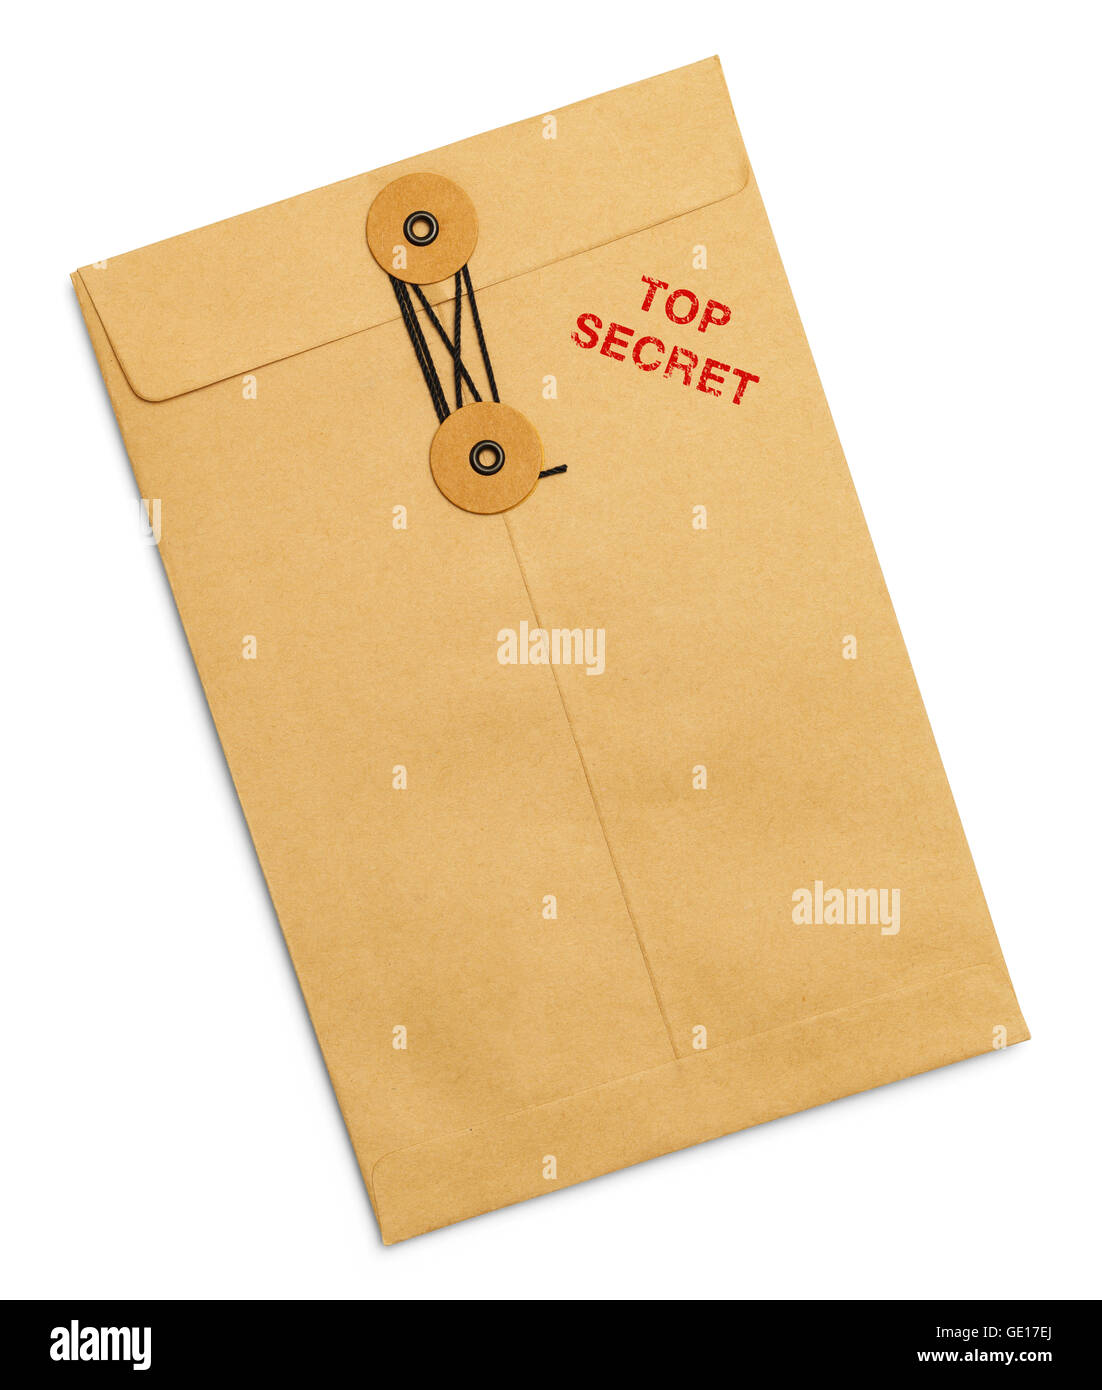 Top Secret Tied Sealed Envelope Isolated on White Background. Stock Photo